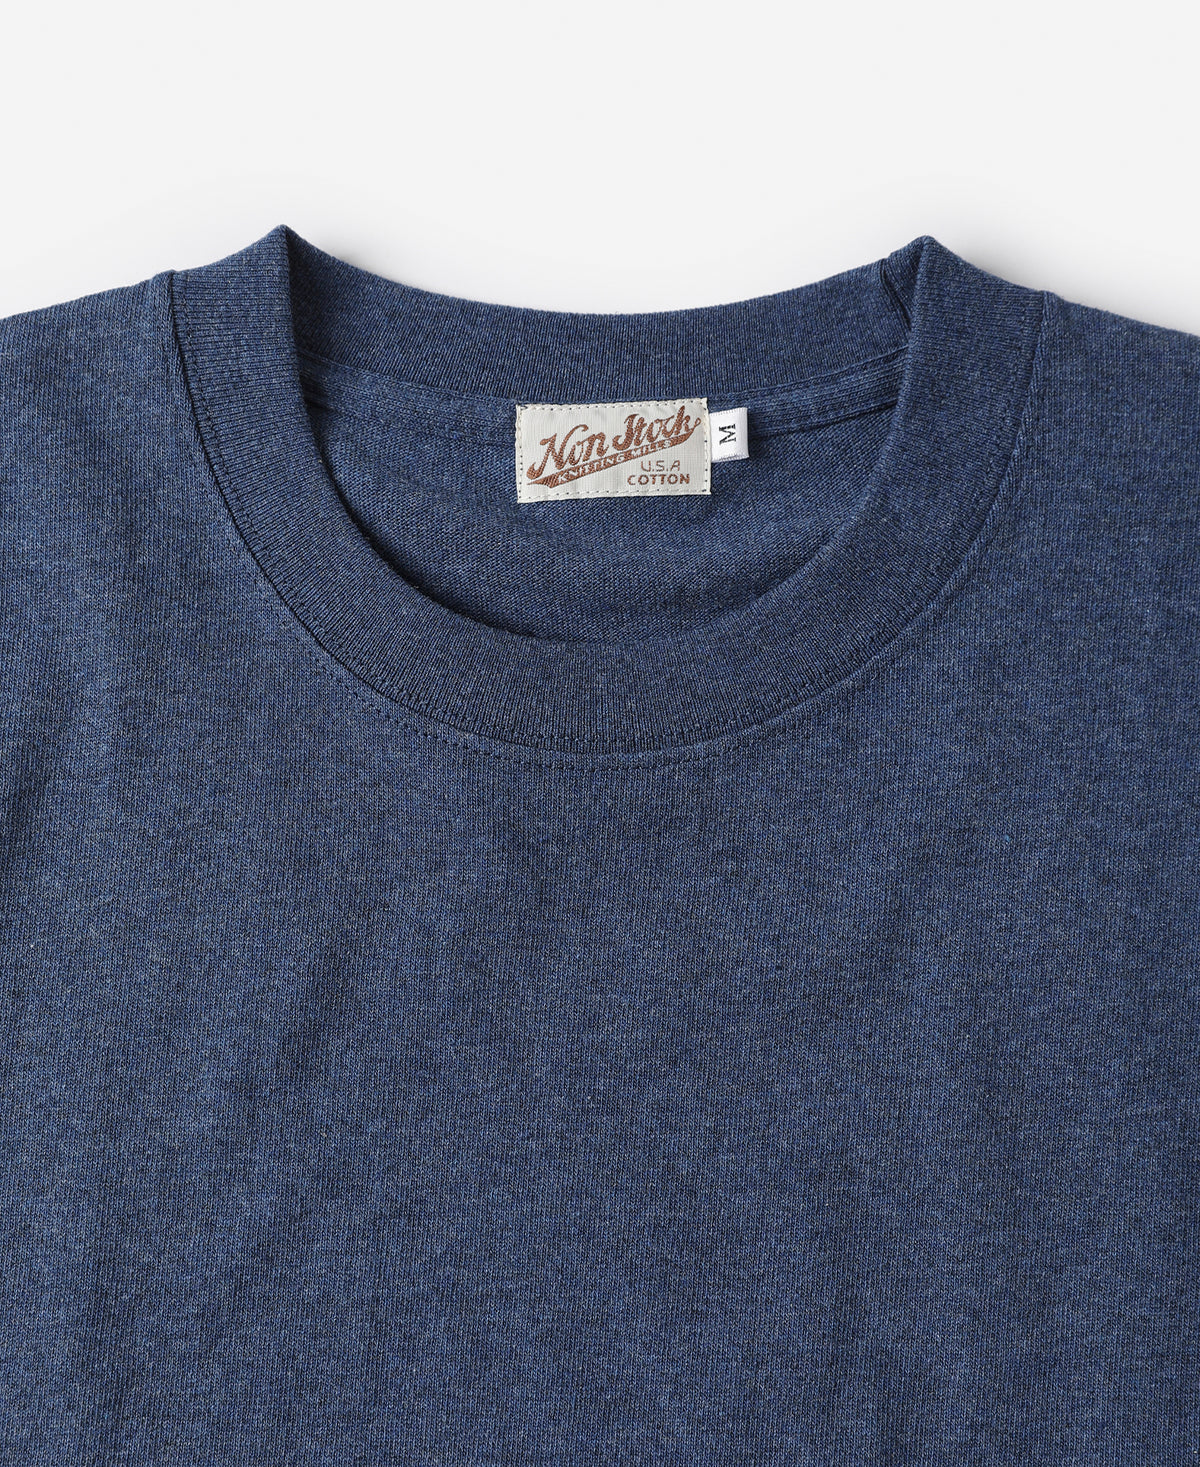 9 oz US Cotton Tubular T-Shirt - Denim Blue